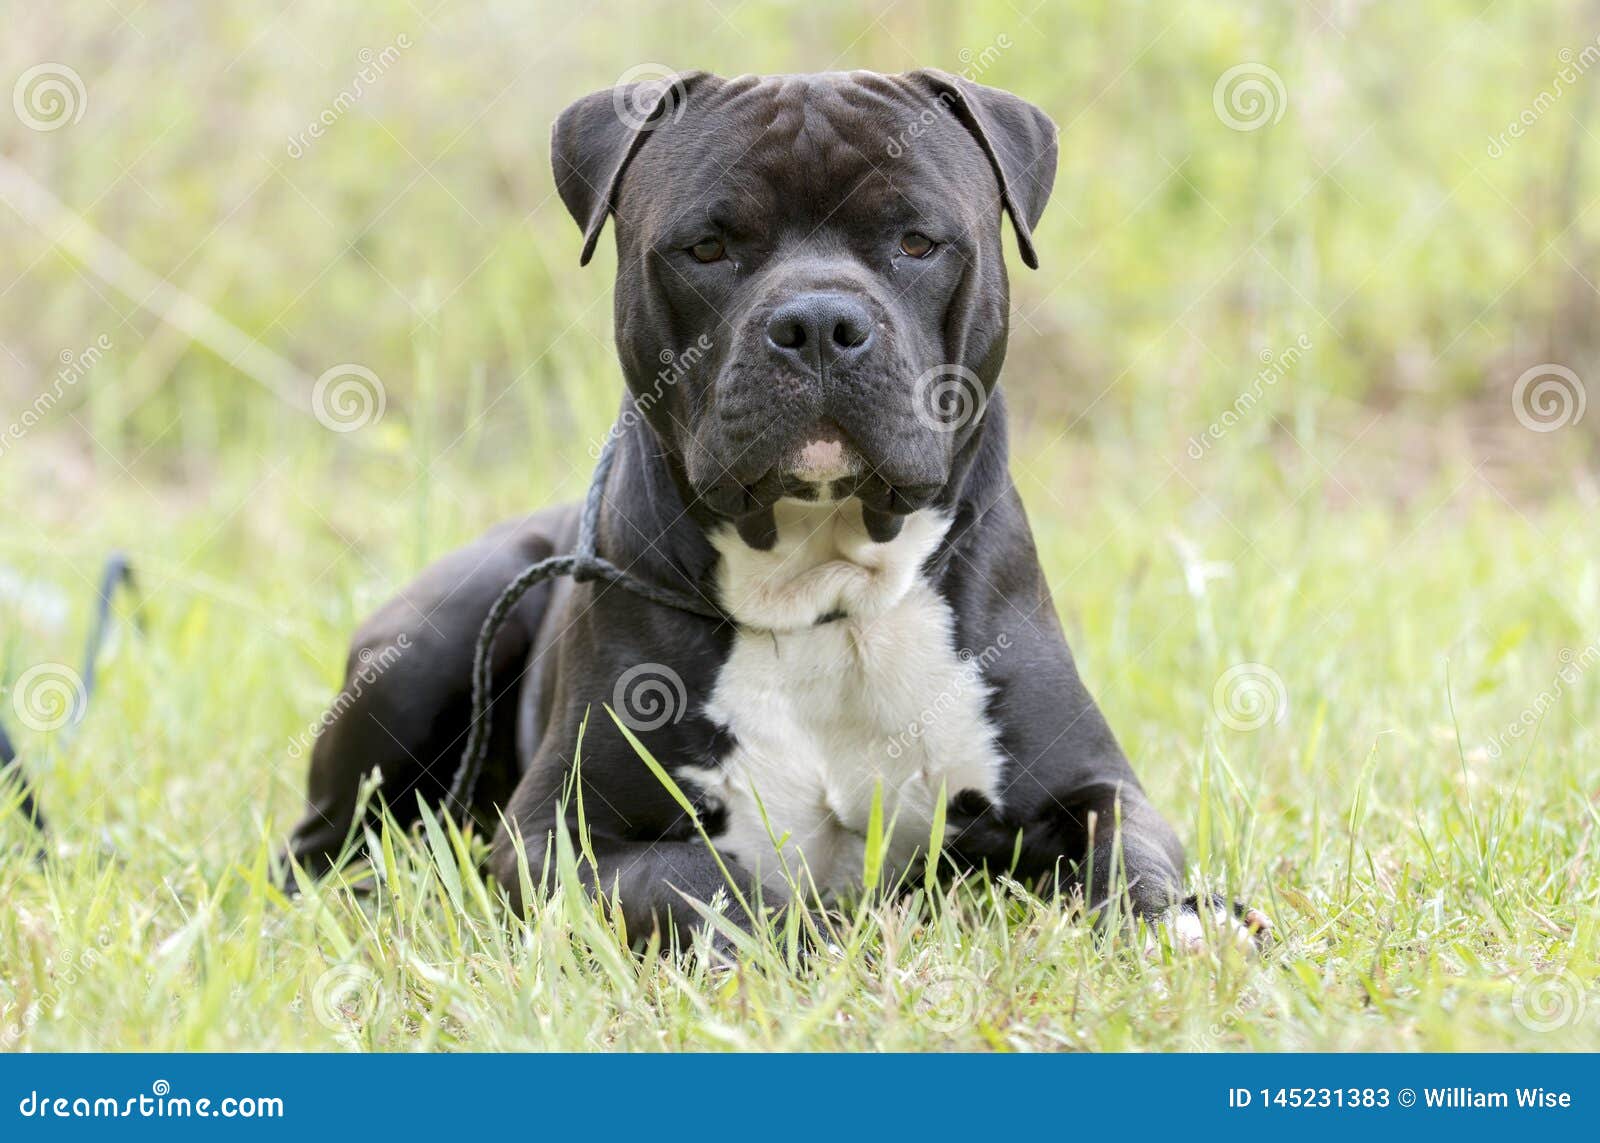 Large Black Cane Corso And Pitbull Terrier Mix Dog Stock Image Image Of Mixed Black 145231383